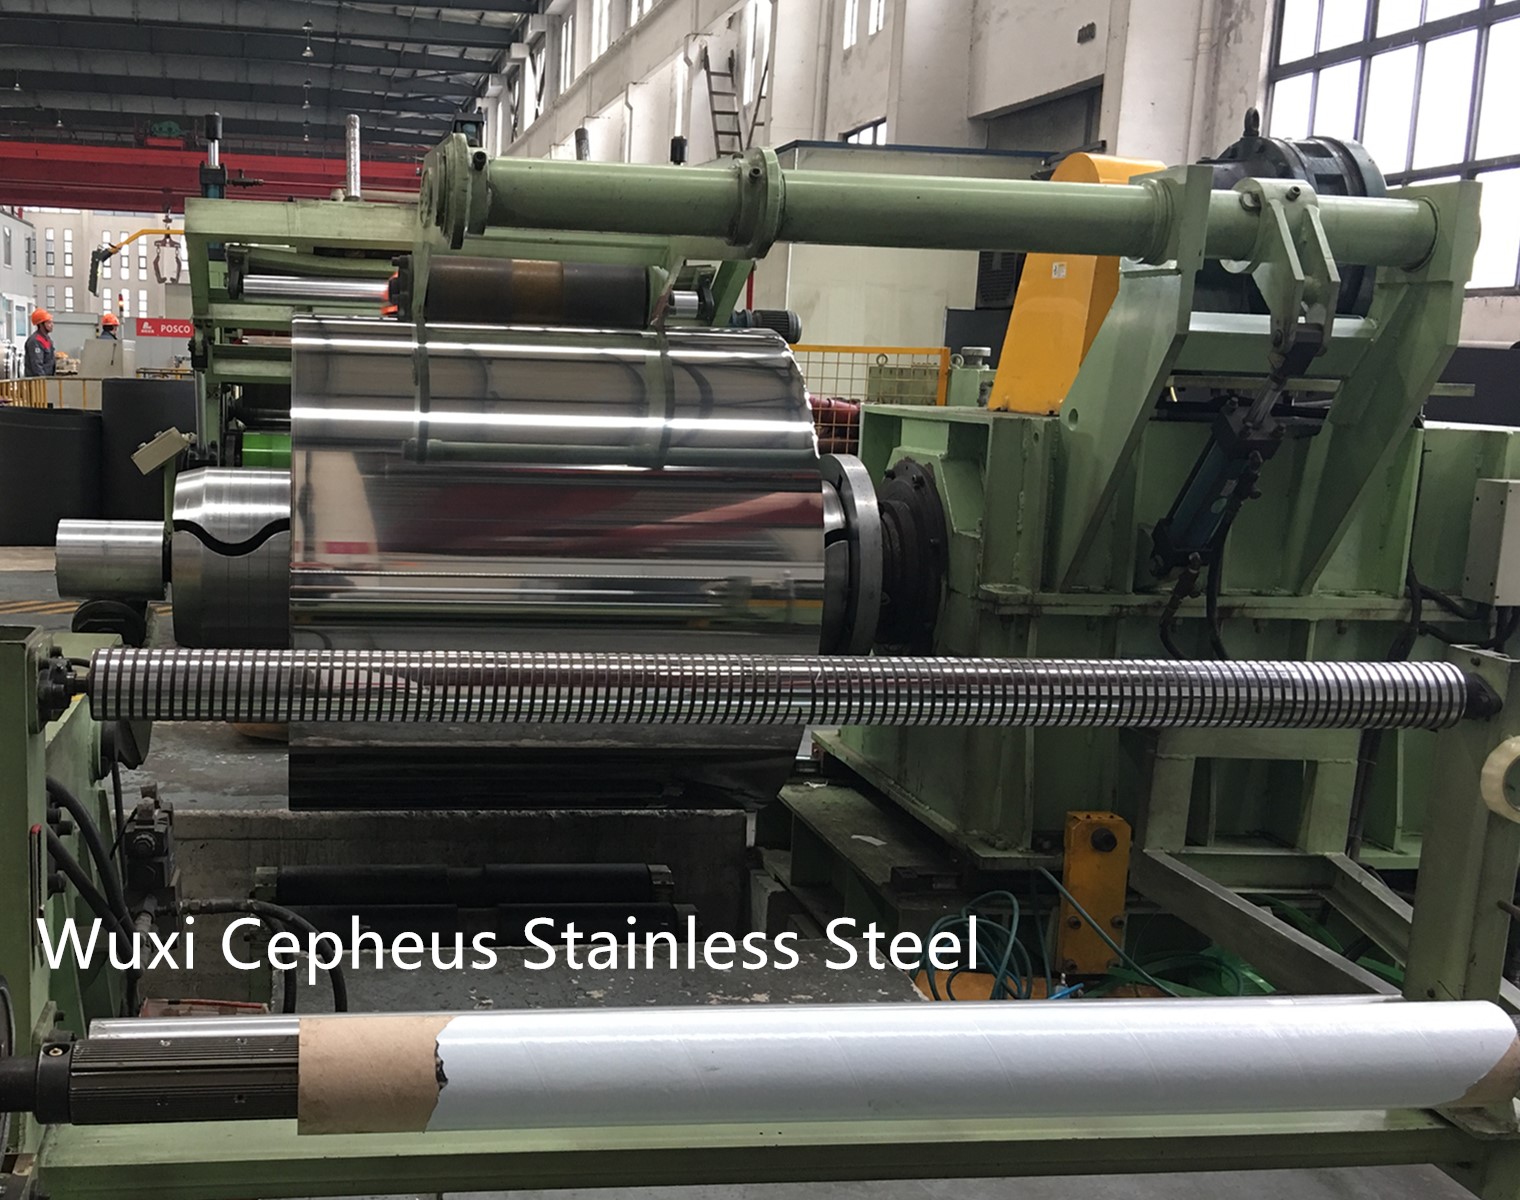 wuxi cepheus stainless steel (5)